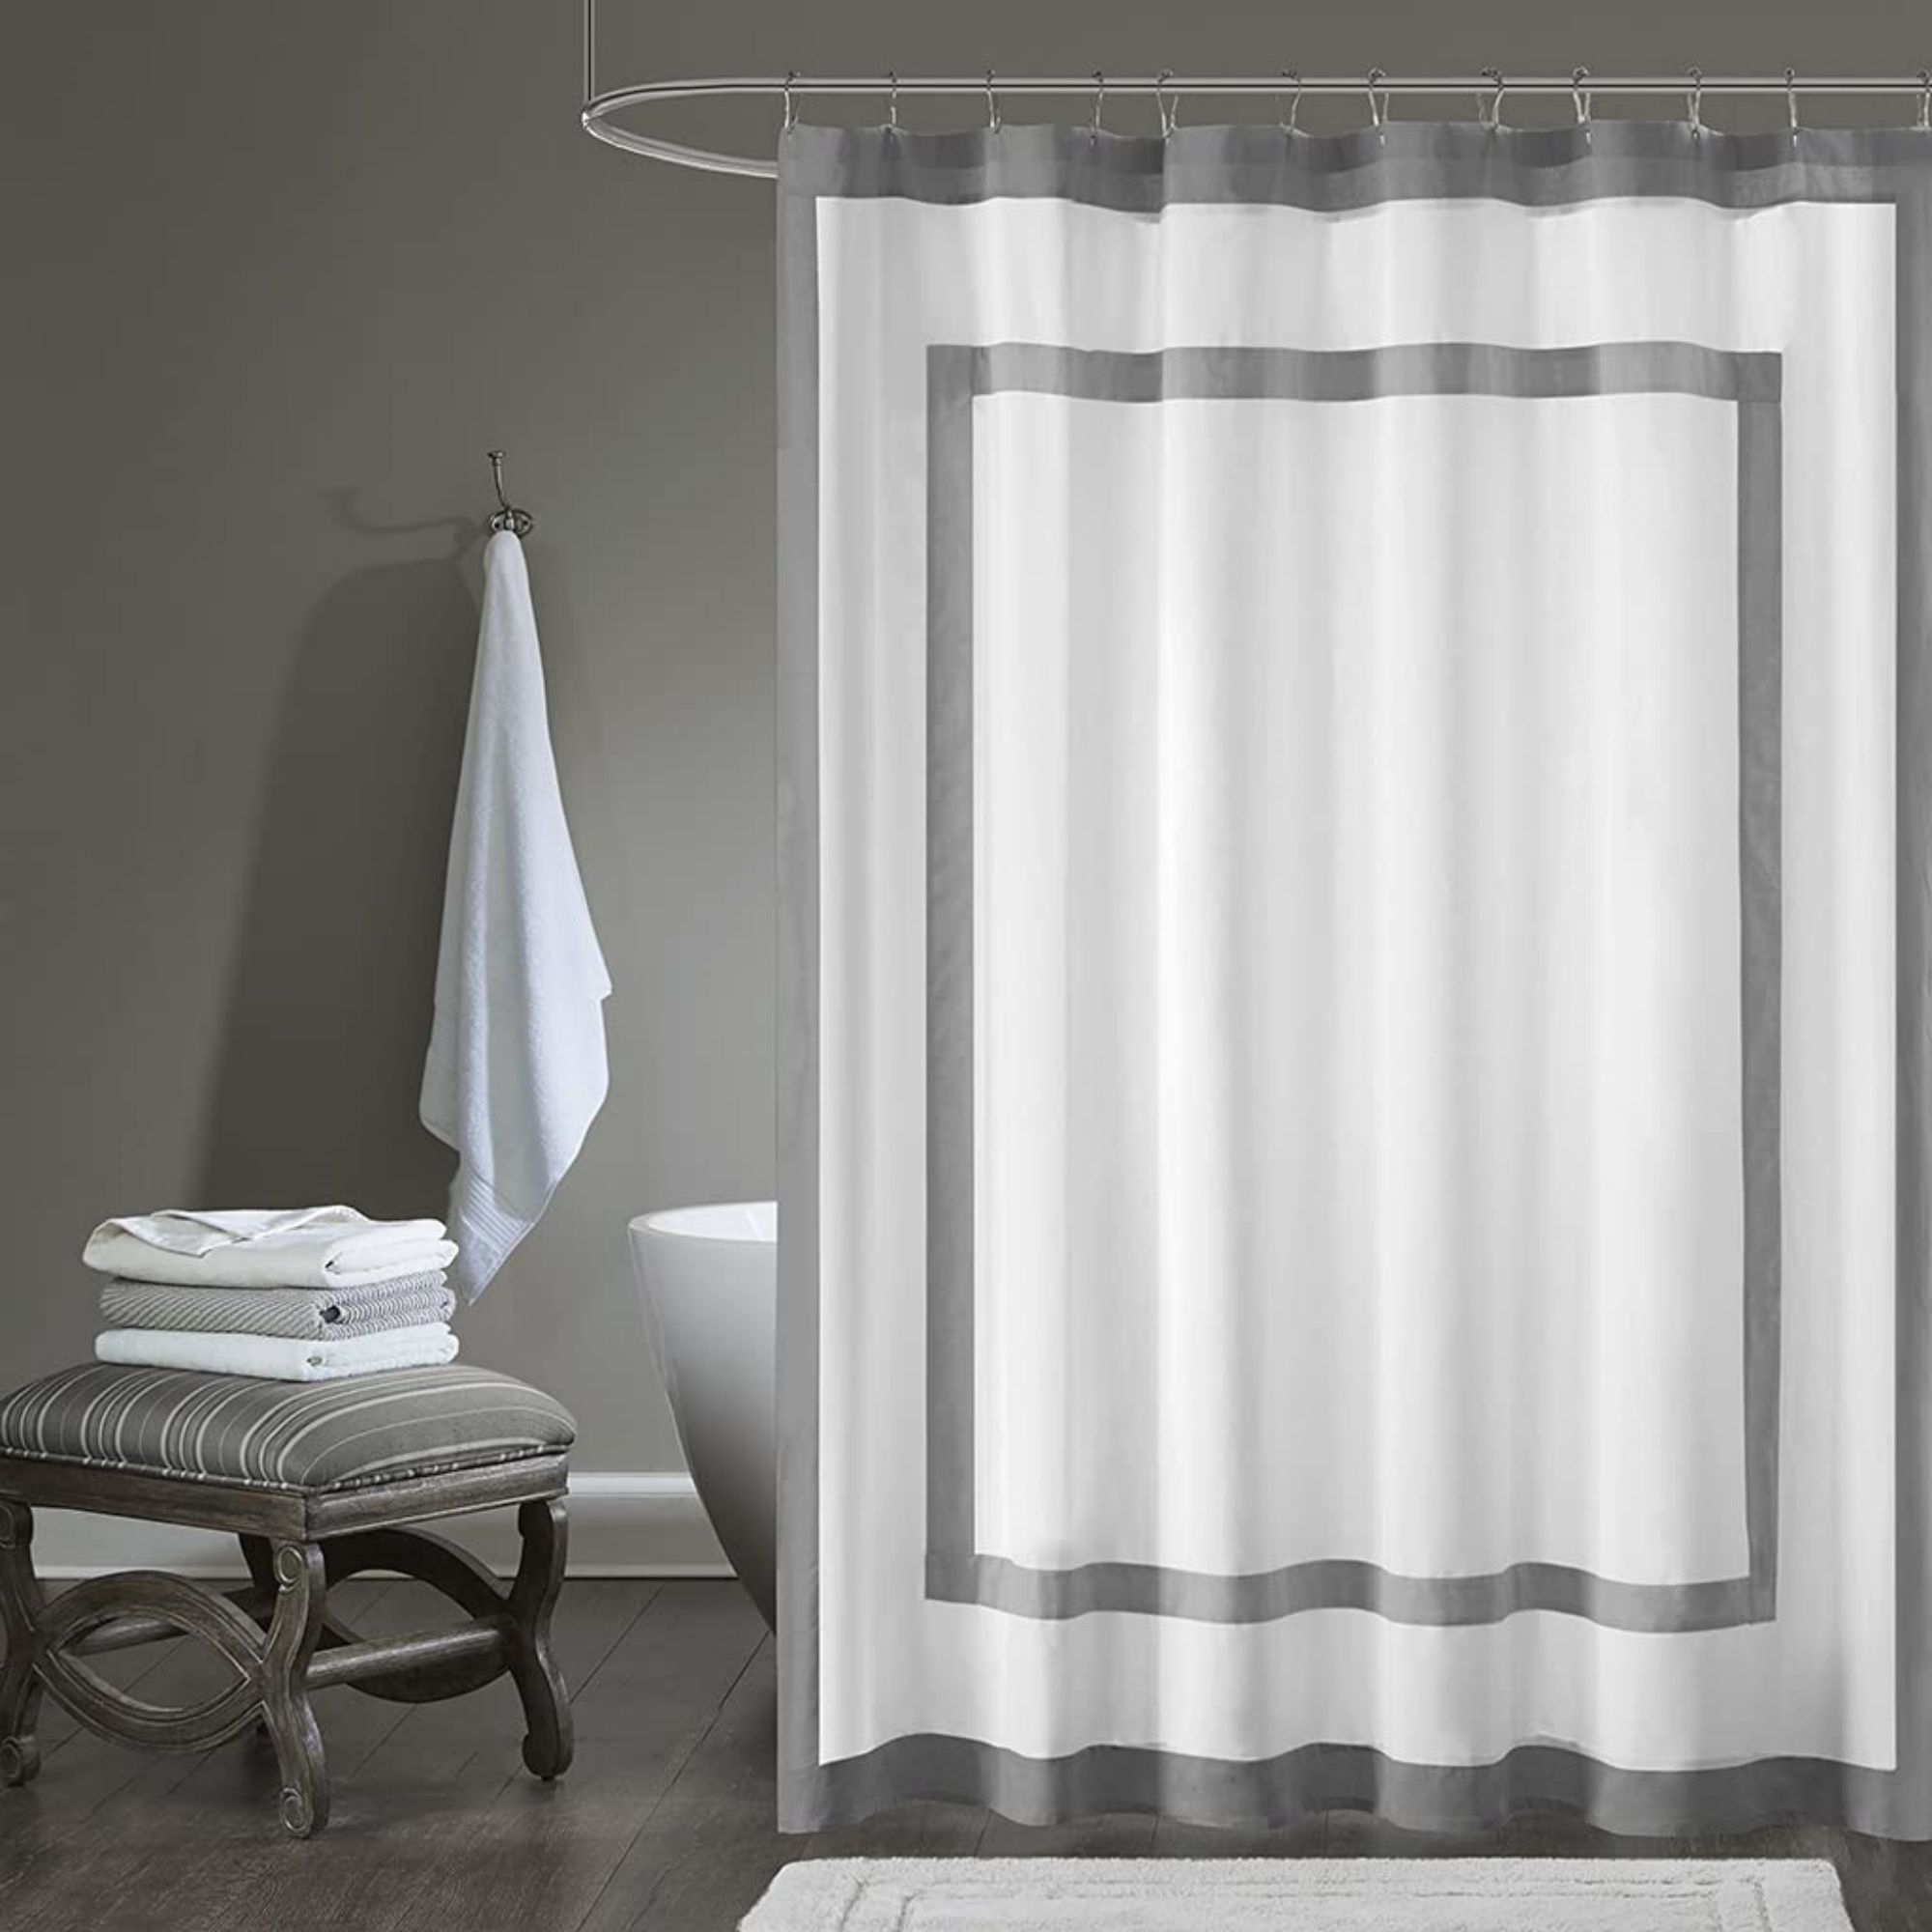 Home Essence Jackson Cotton Shower Curtain - image 1 of 4